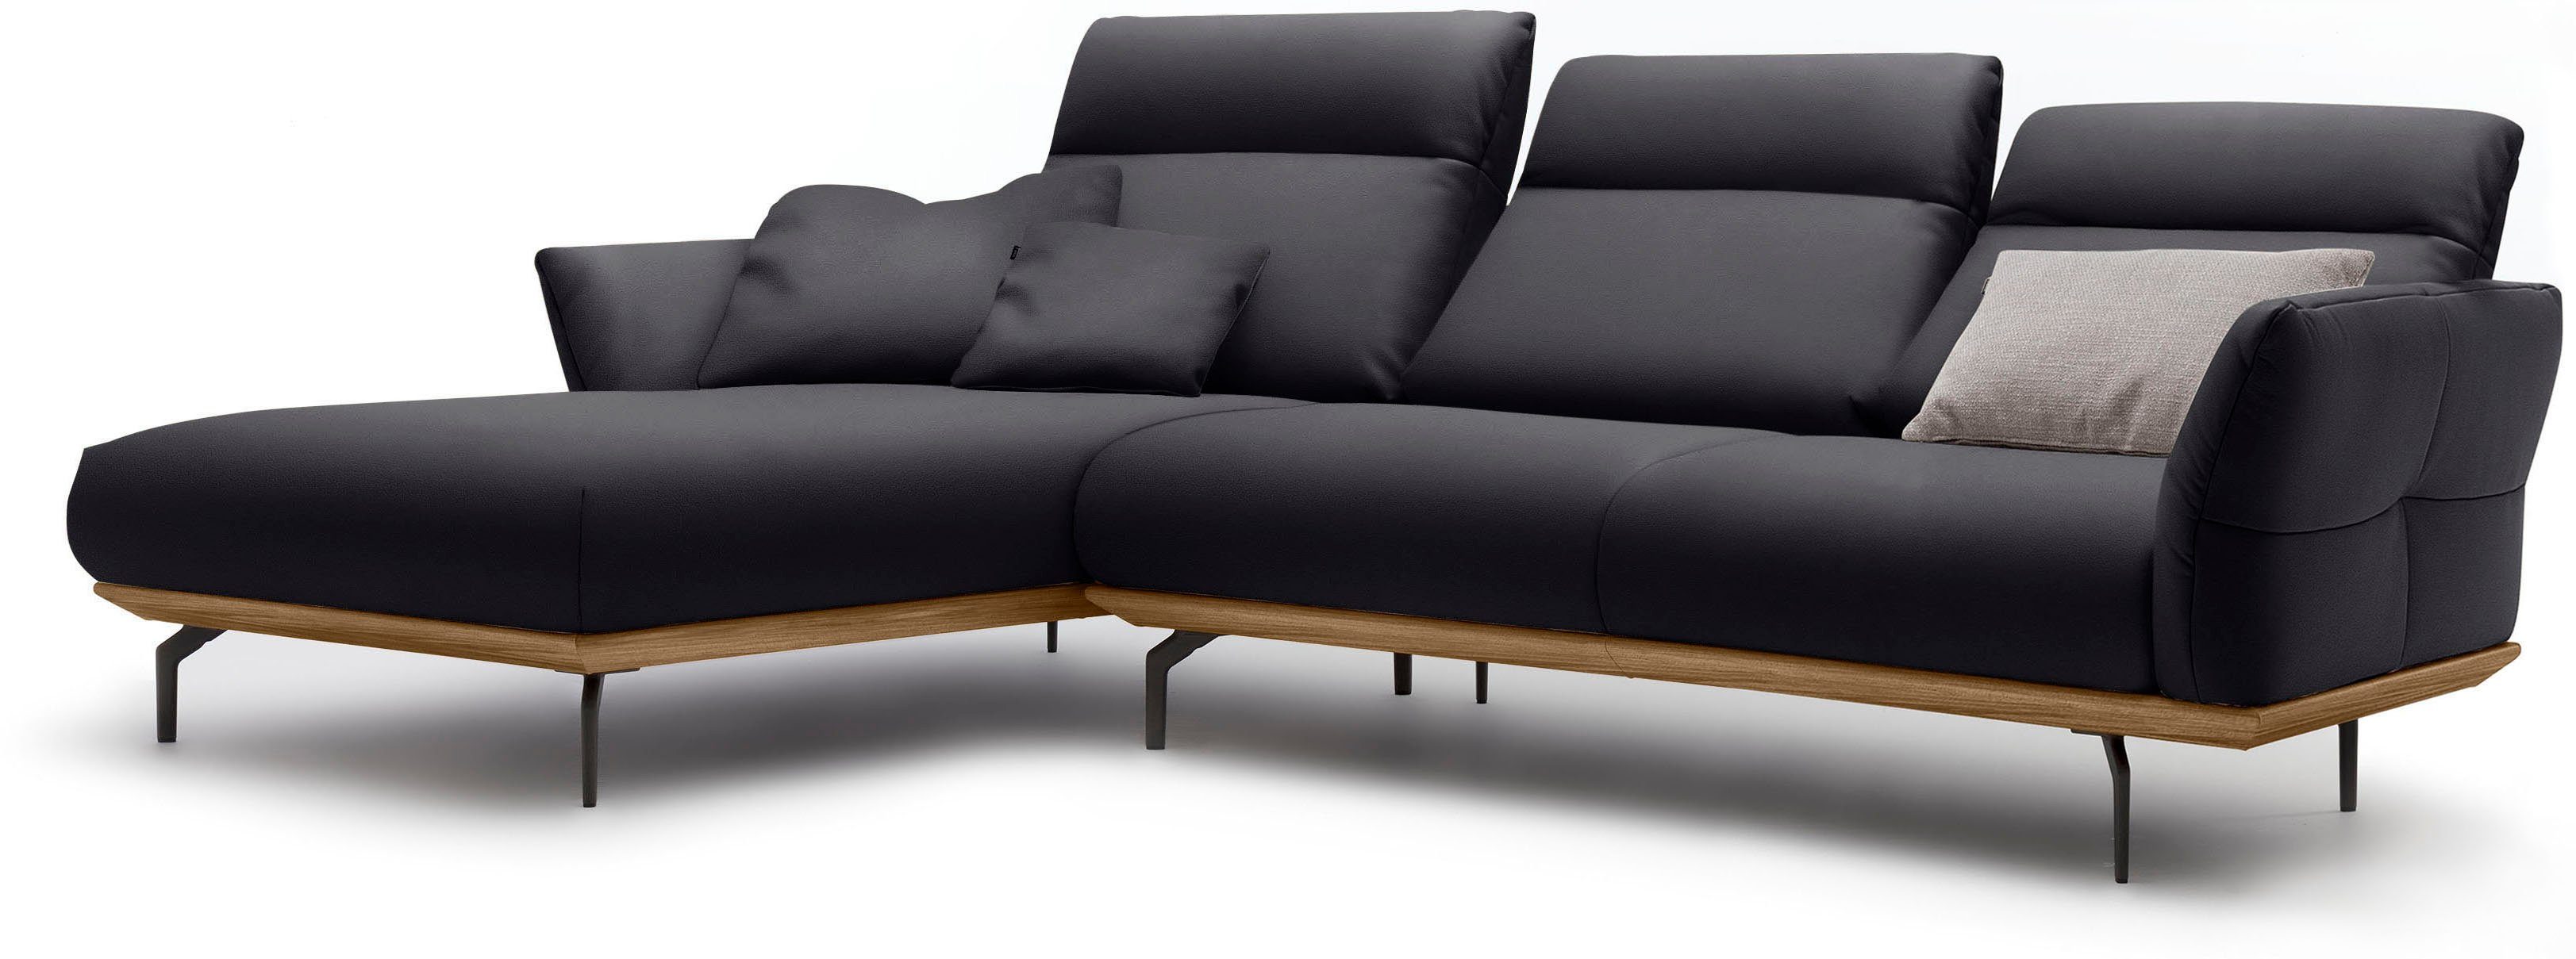 sofa Ecksofa 298 Umbragrau, Winkelfüße Nussbaum, Breite hülsta in hs.460, Sockel cm in